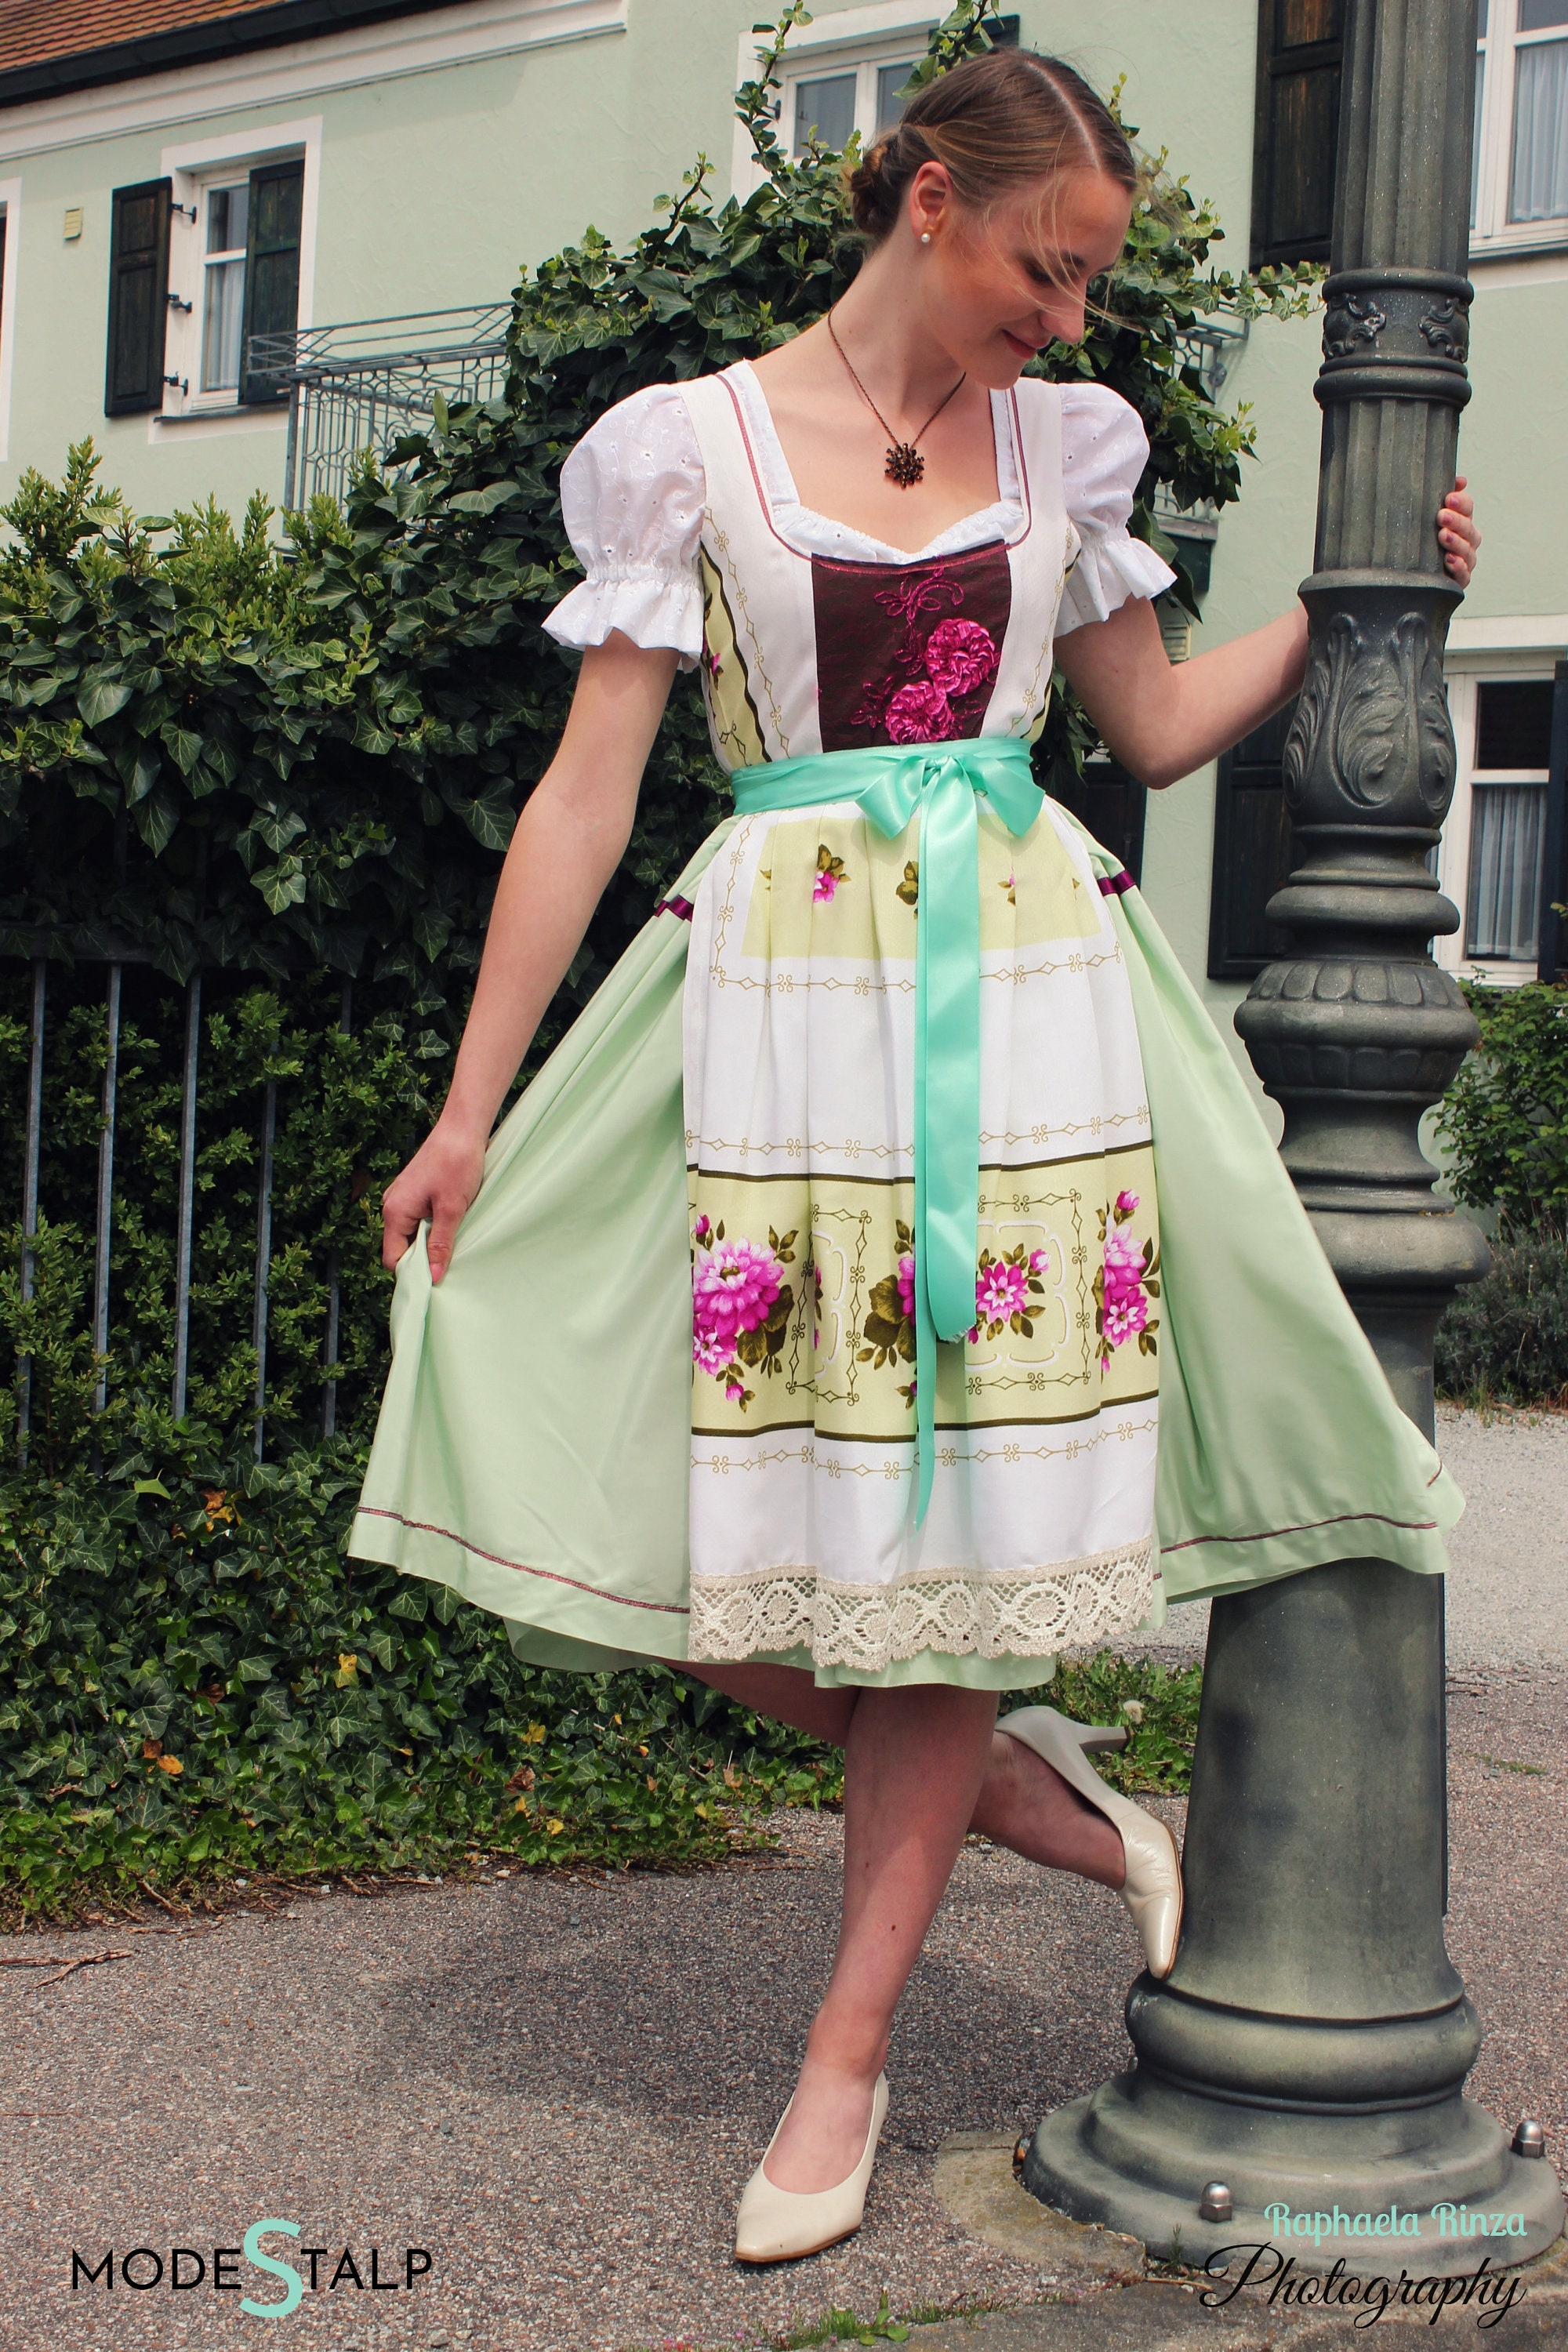 Dubbelzinnig Spuug uit Leerling Dirndl Dress With Apron and Blouse Single Piece Size 36 - Etsy